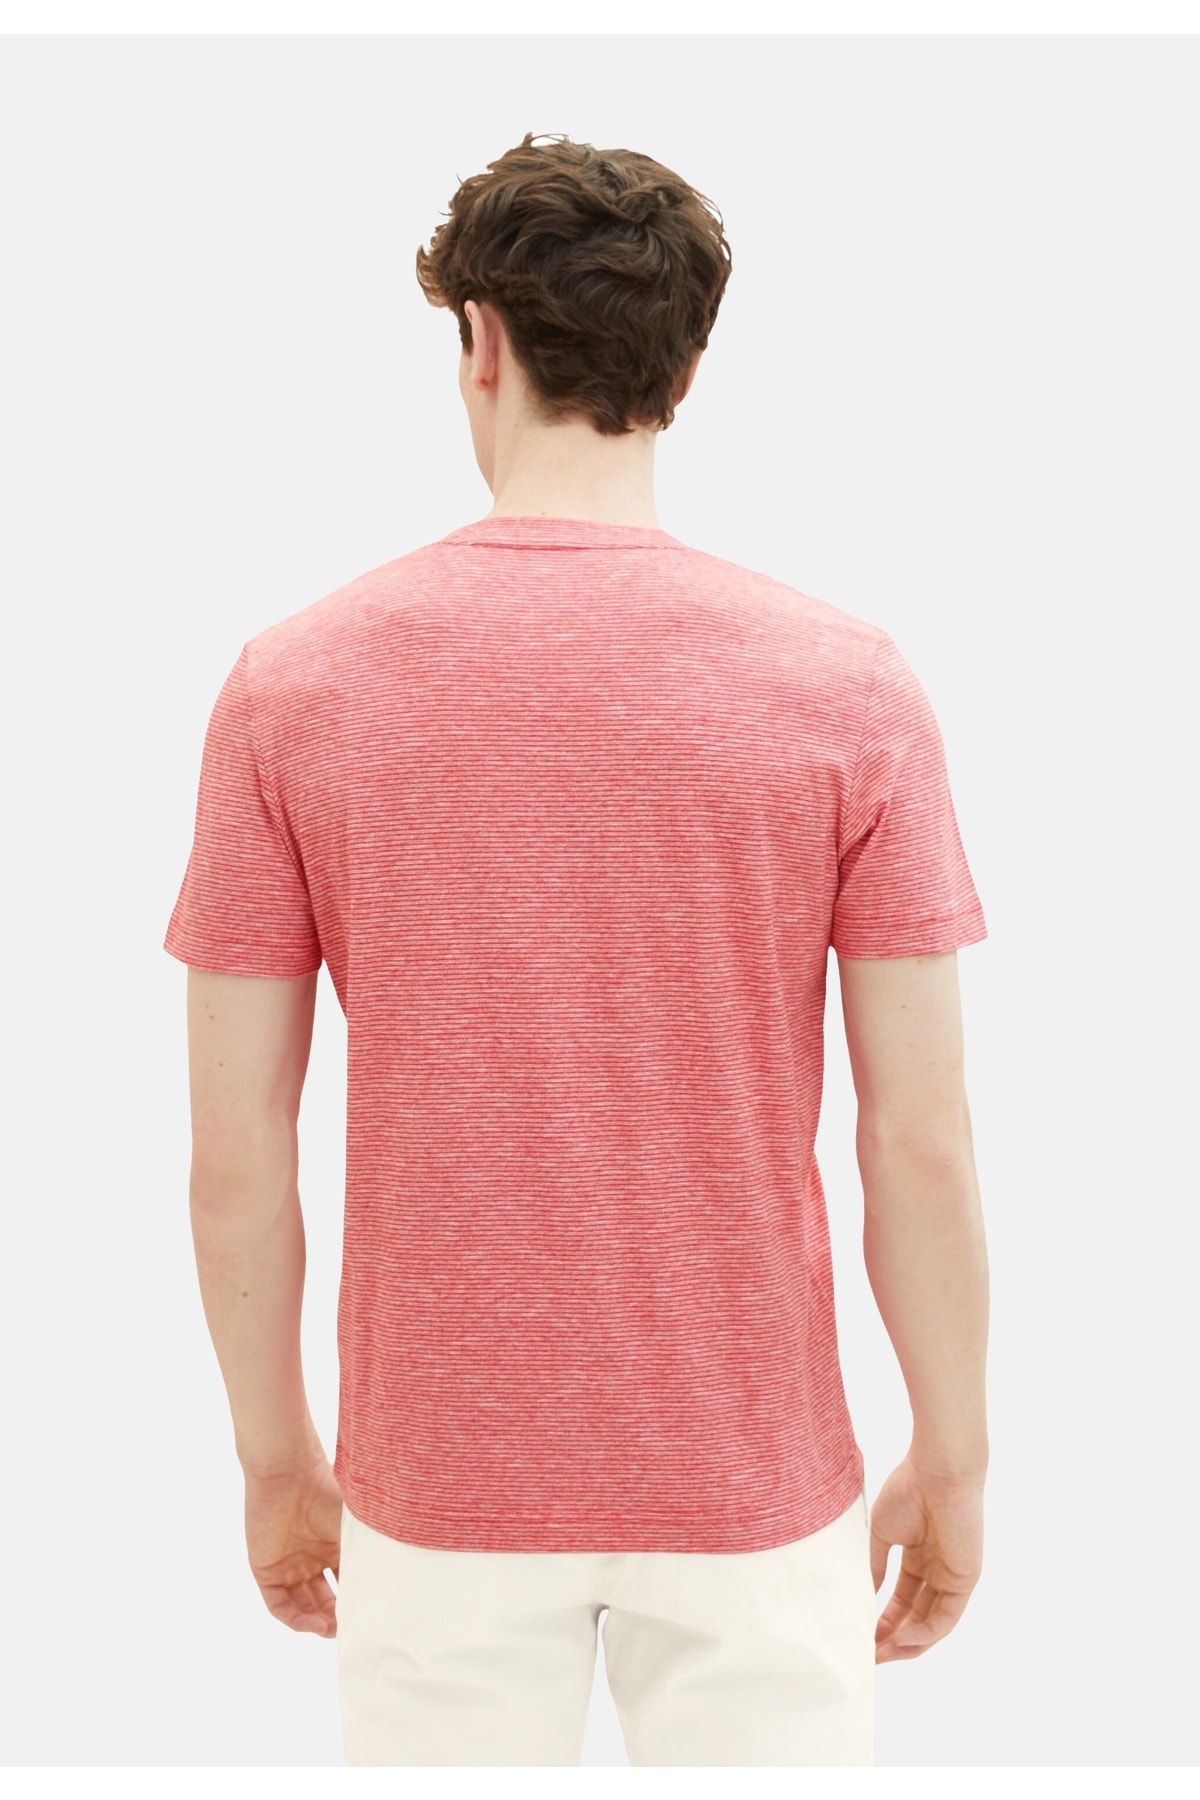 Tom Tailor T-Shirt - Red - Regular fit - Trendyol